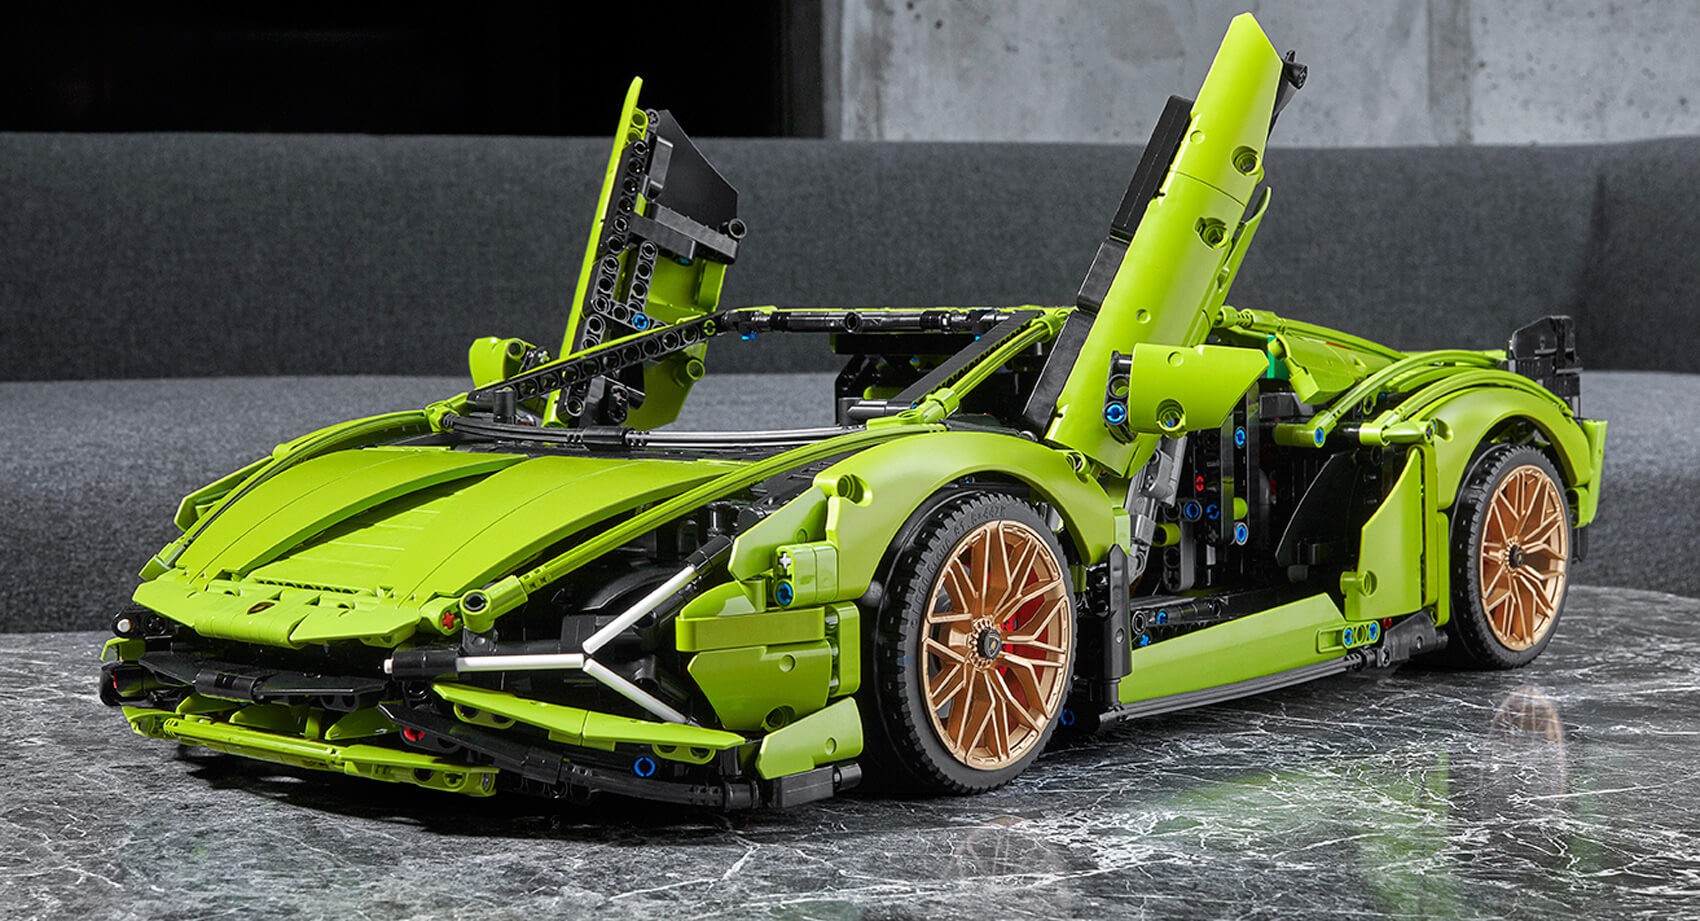 LEGO Technic Lamborghini Sian FKP 37 Is A 3,696 (Master)Piece 1:8 Scale